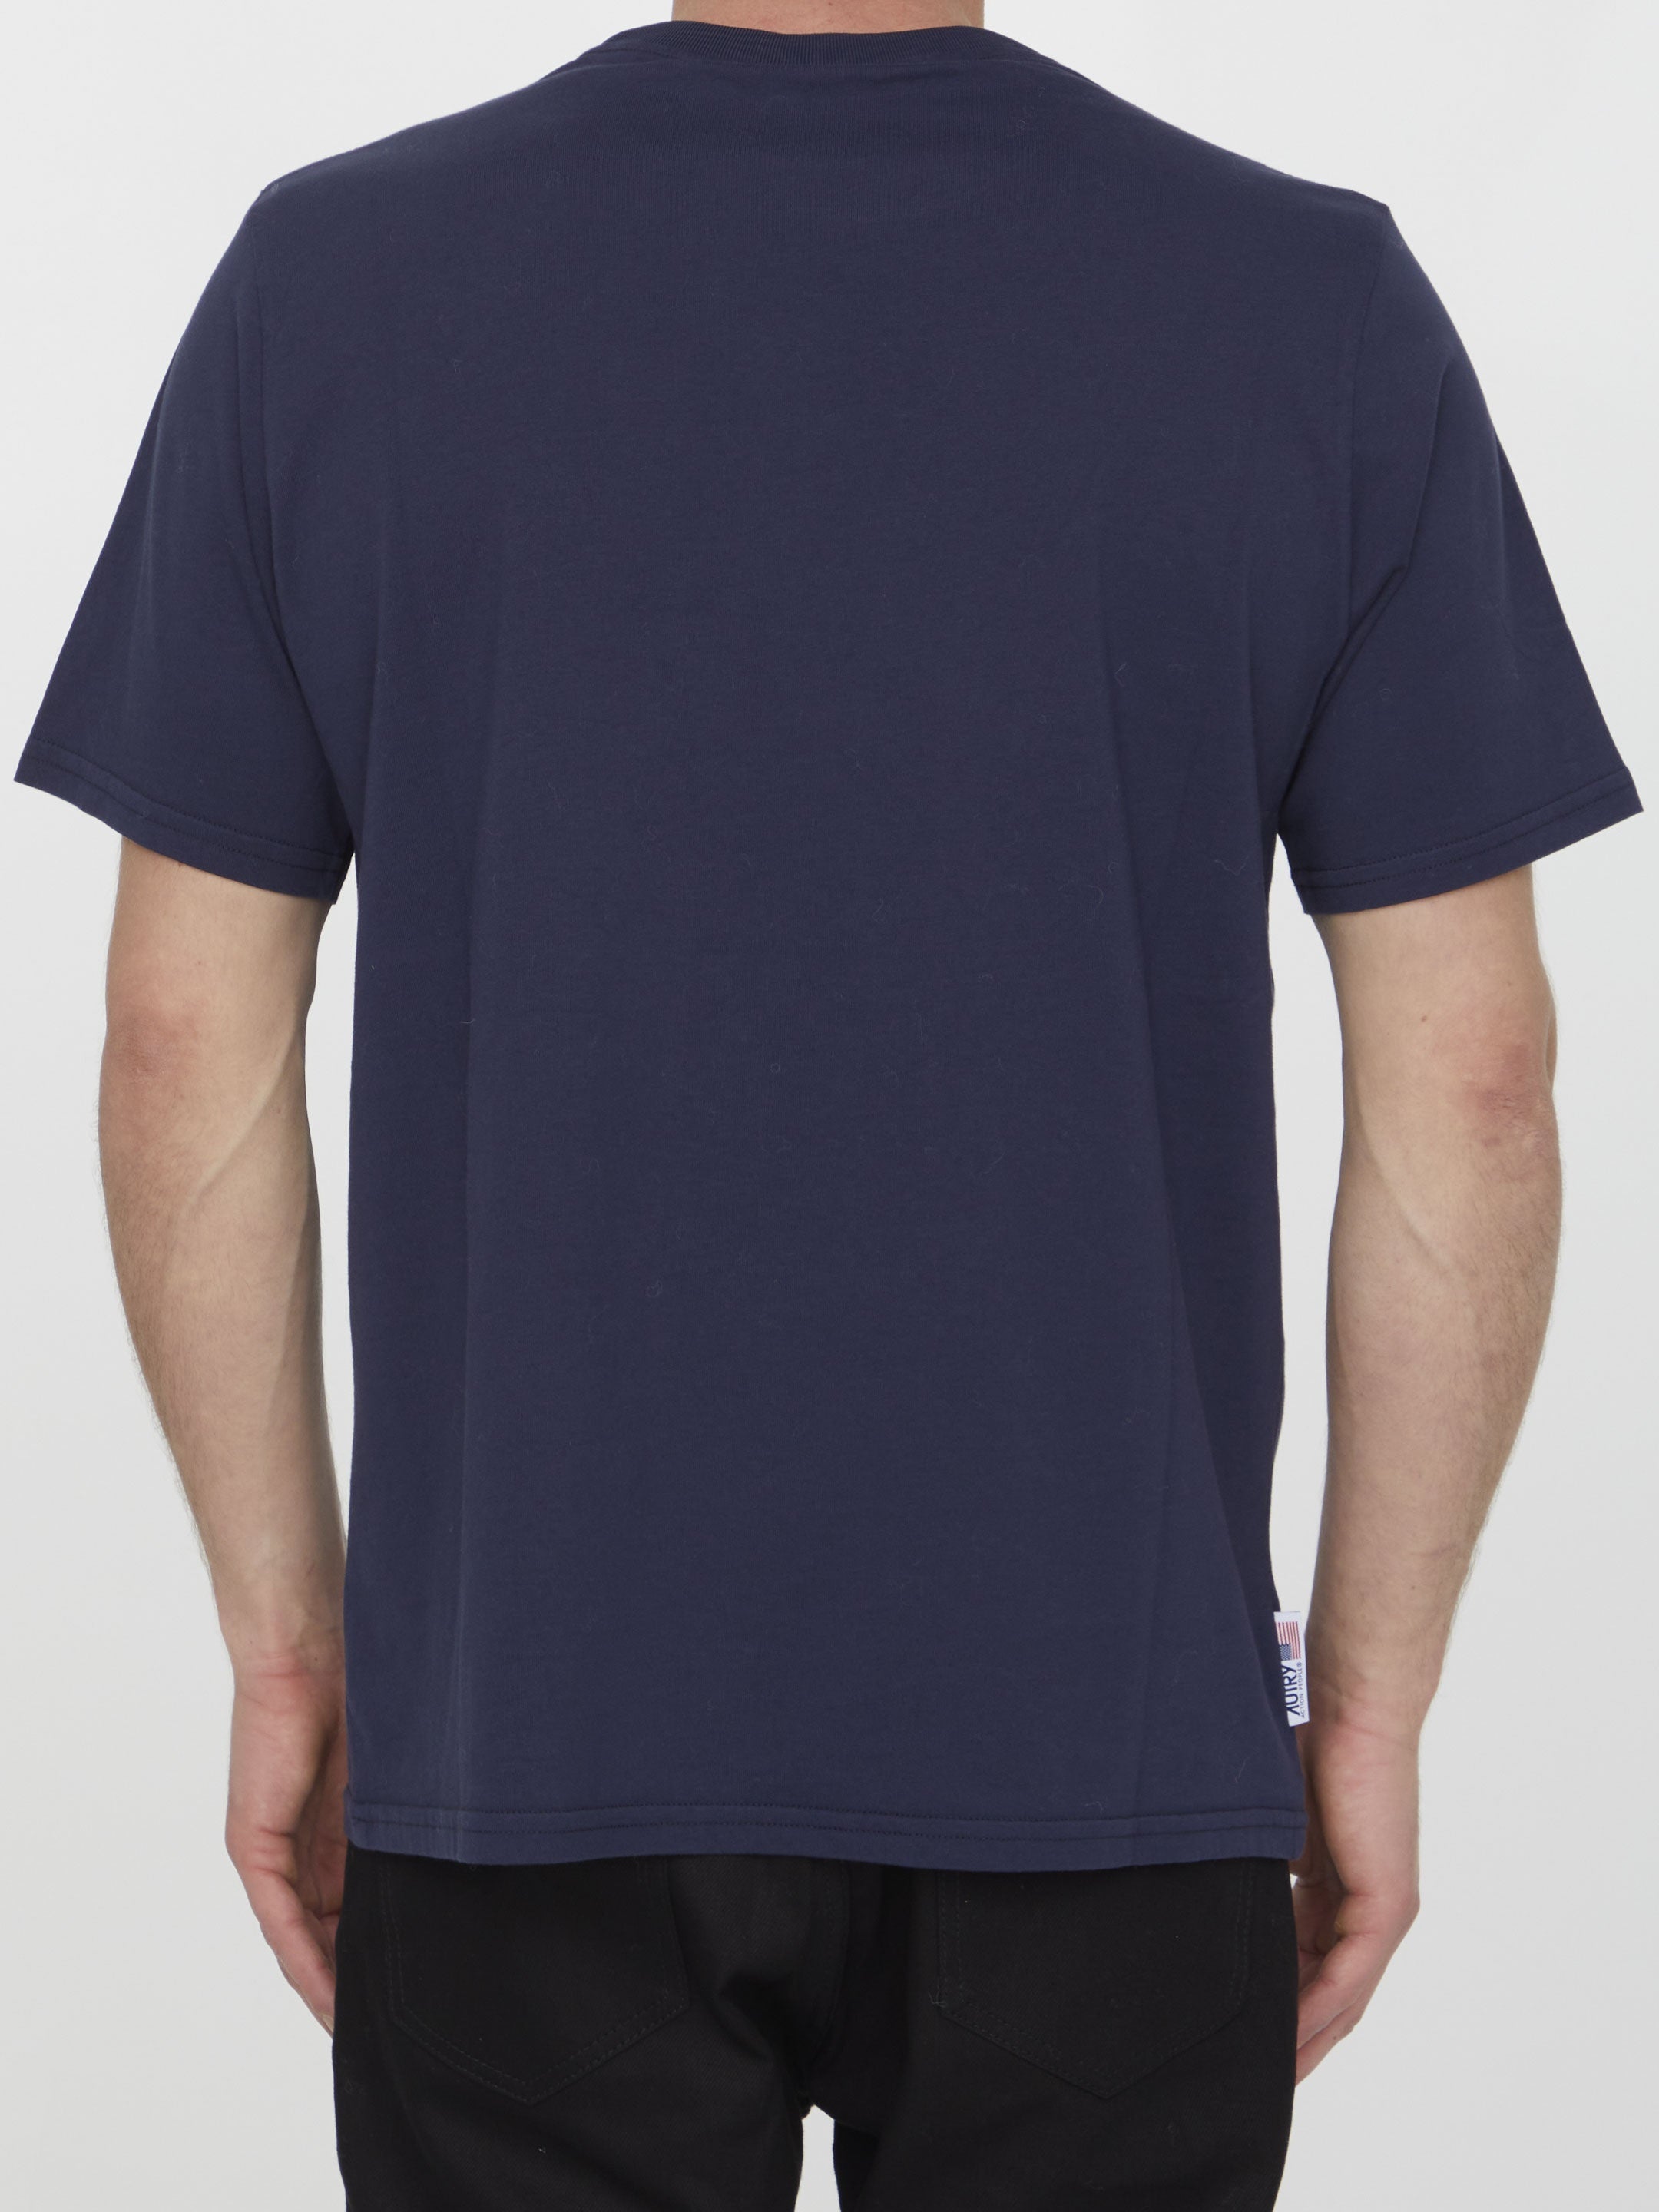 AUTRY-OUTLET-SALE-Cotton-t-shirt-with-logo-Shirts-ARCHIVE-COLLECTION-4_d96cebec-028f-4c3b-8397-1c008fa54d80.jpg